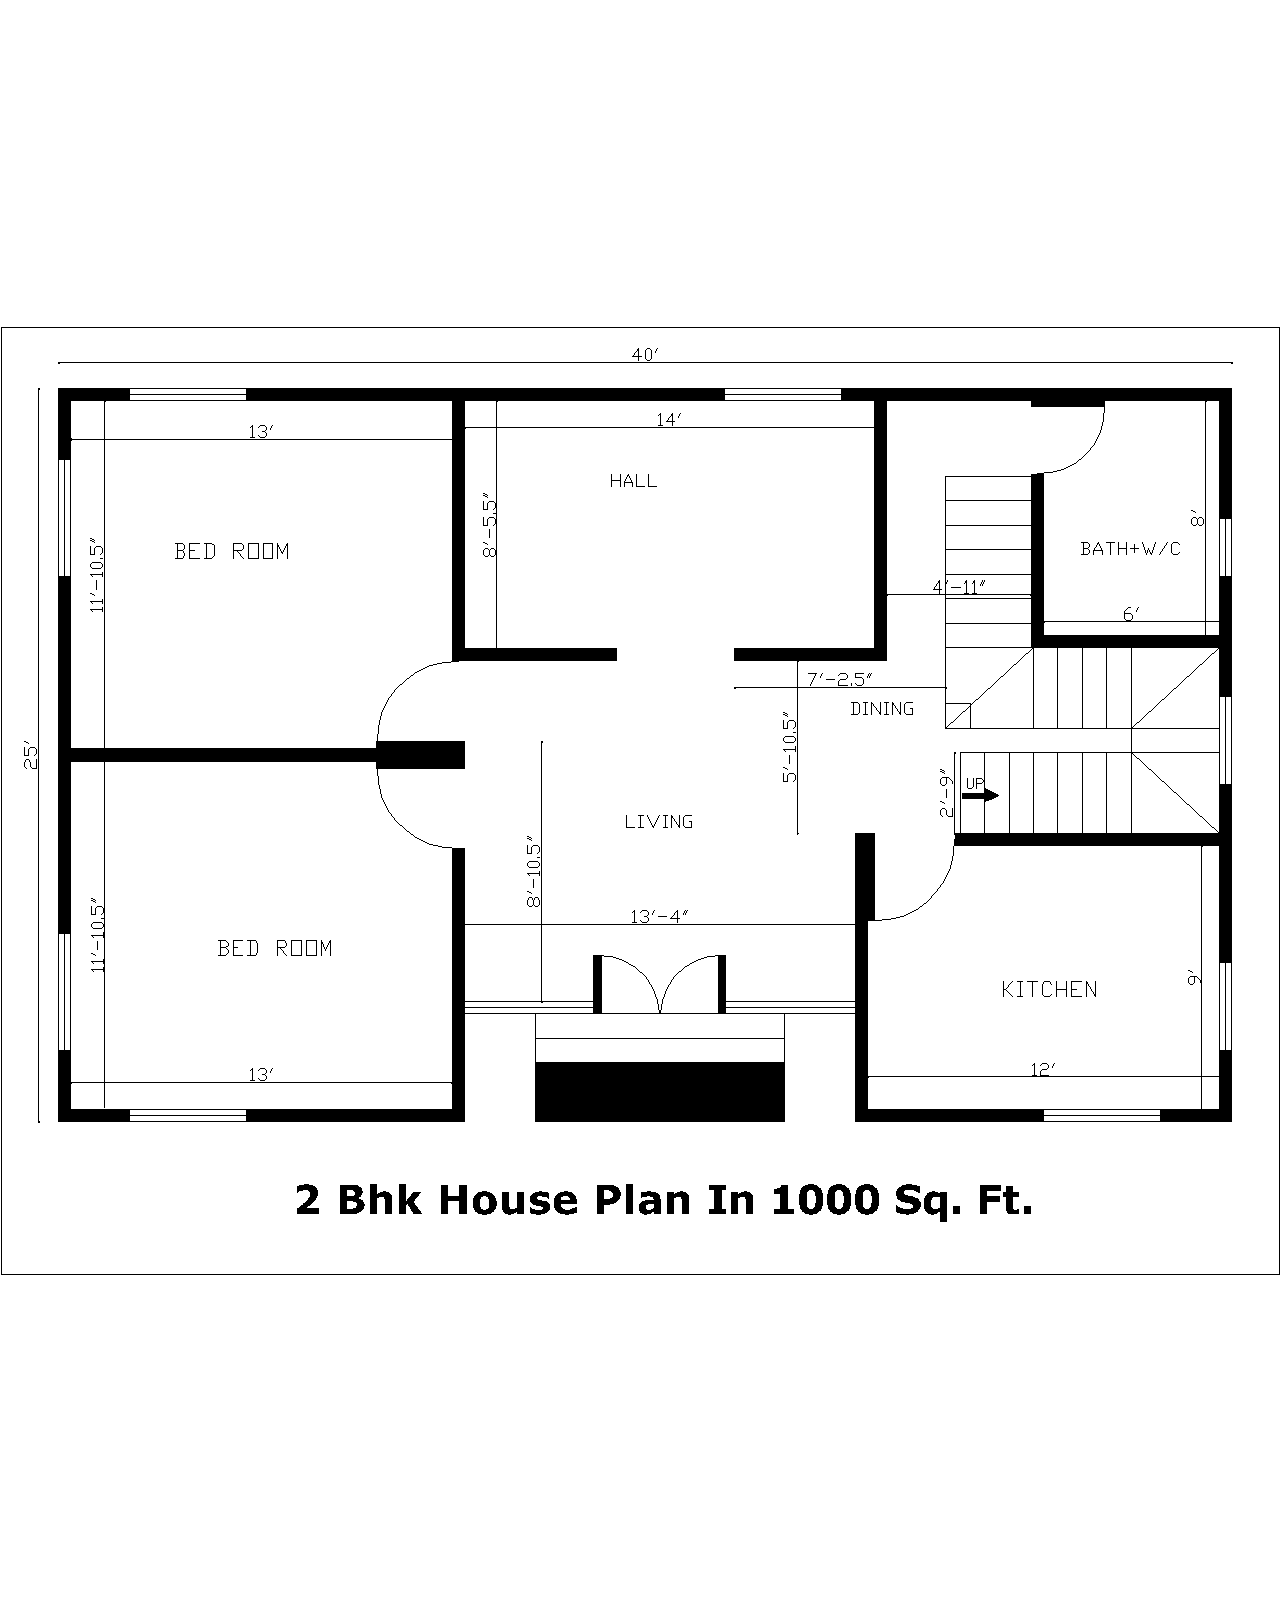 2 Bhk House Plan In 1000 Sq. Ft. | 2 Bhk Gharka Naksha In 1000 Sq. Ft.